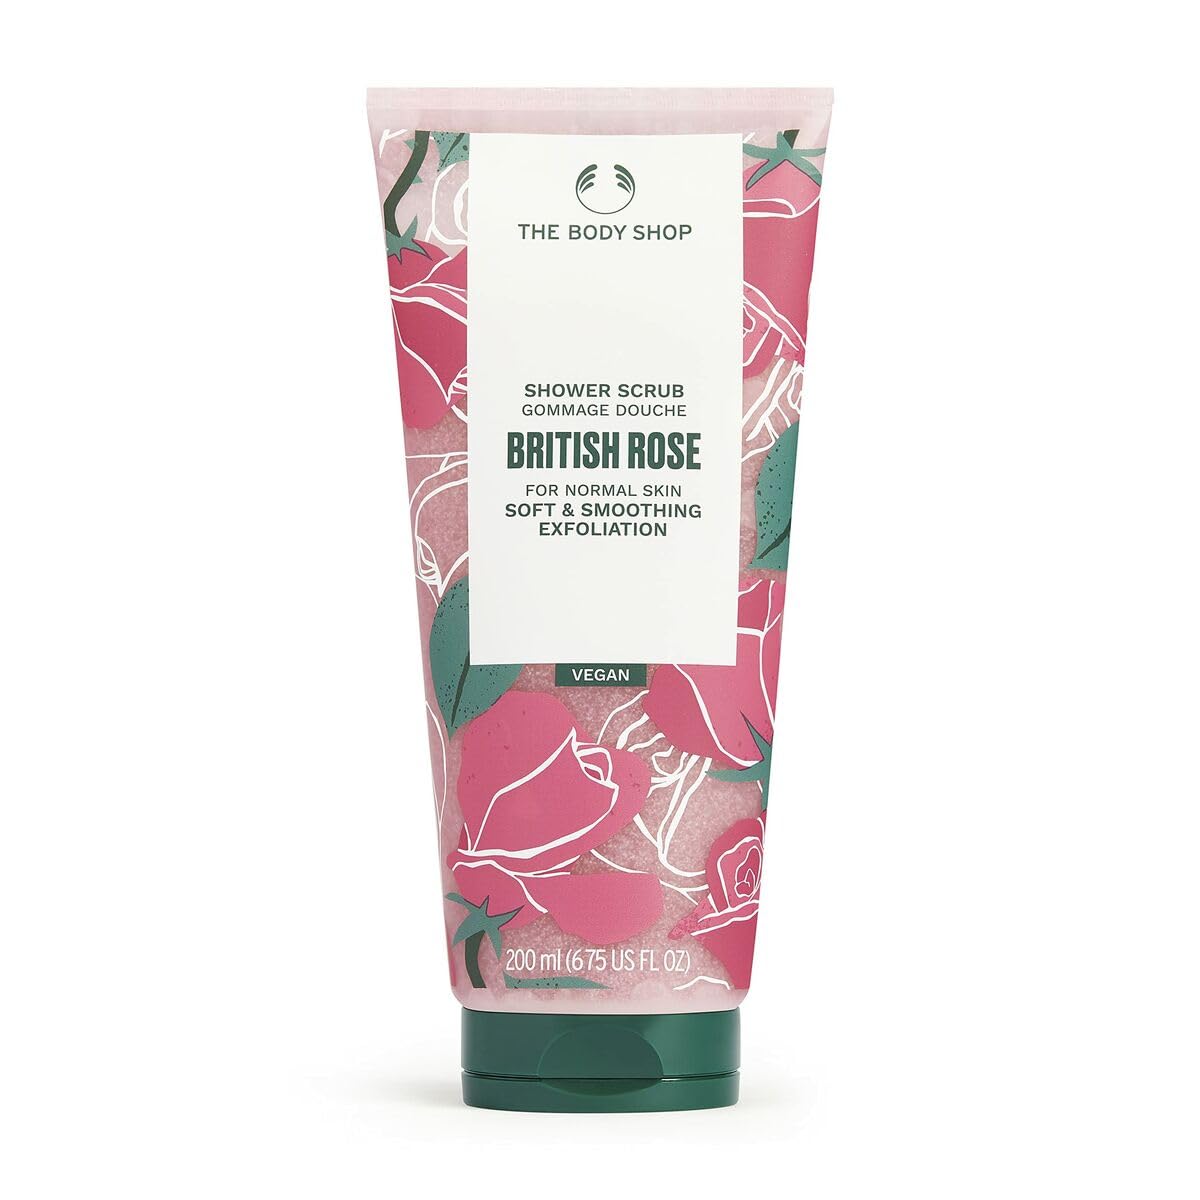 The Body Shop British Rose Shower Scrub - Soft & Smooth Exfoliation For Normal Skin